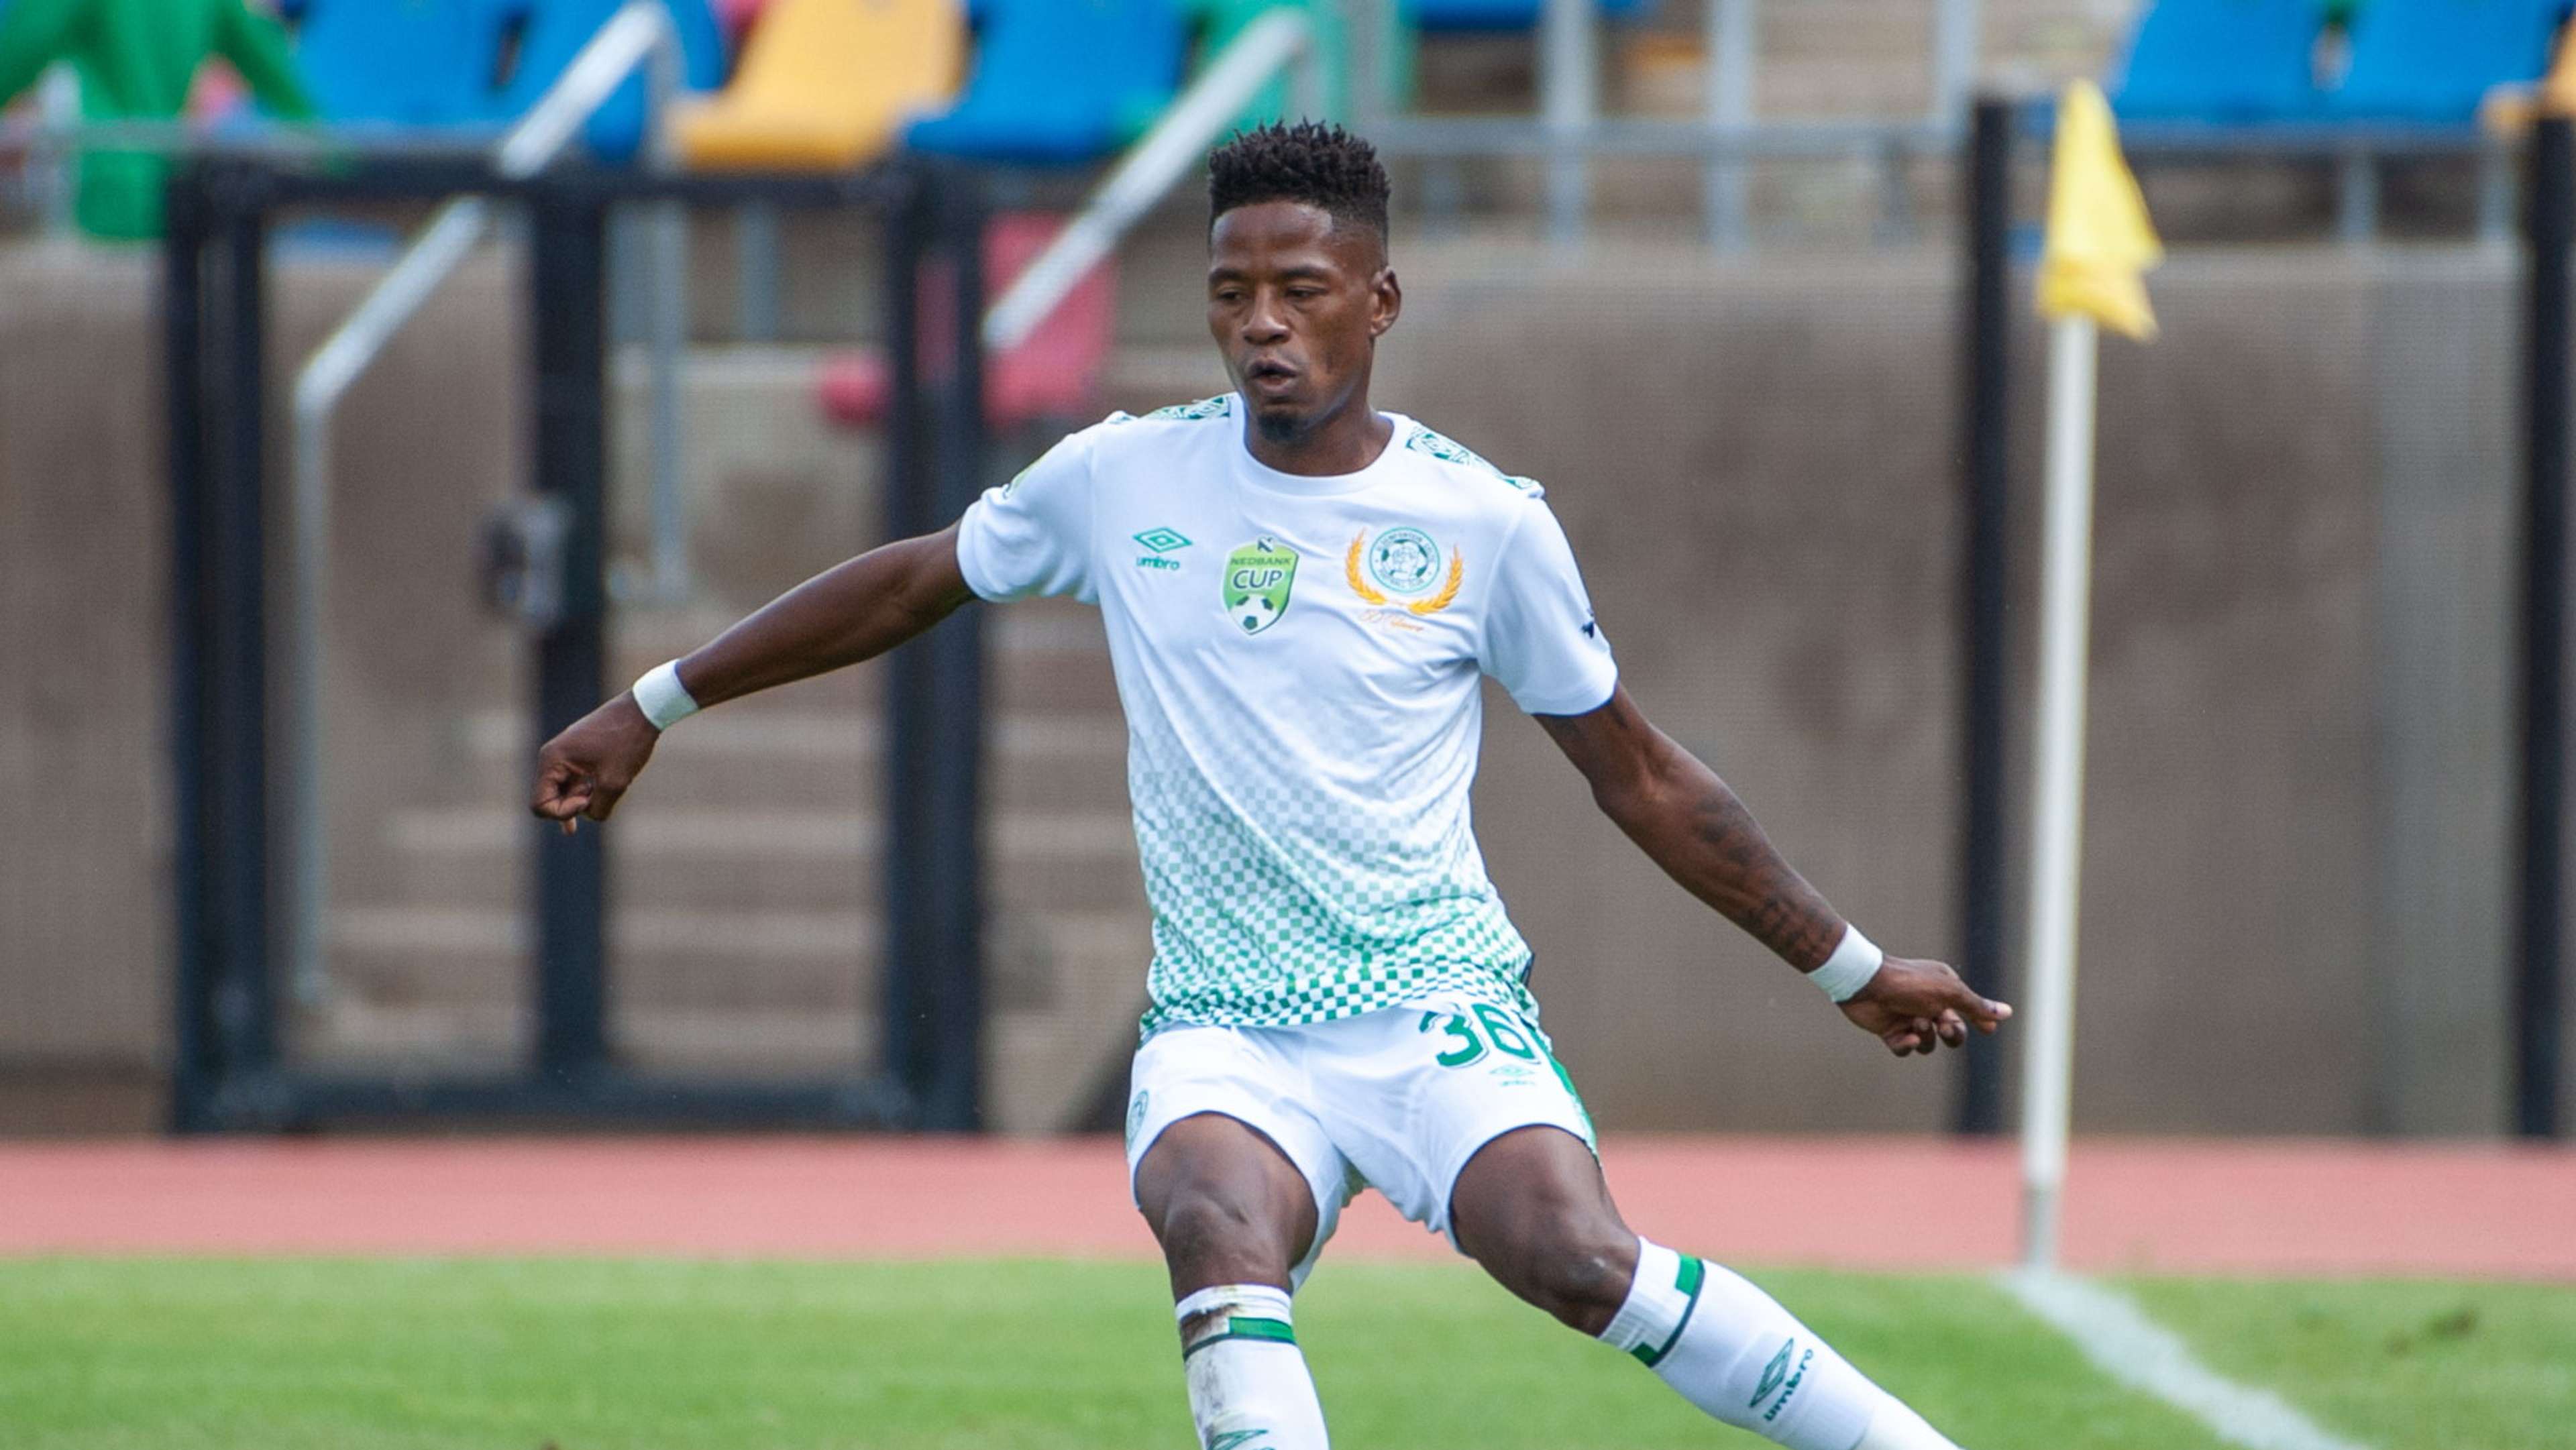 Aviwe Nyamende, Bloemfontein Celtic vs AmaZulu FC, 8 February 2020